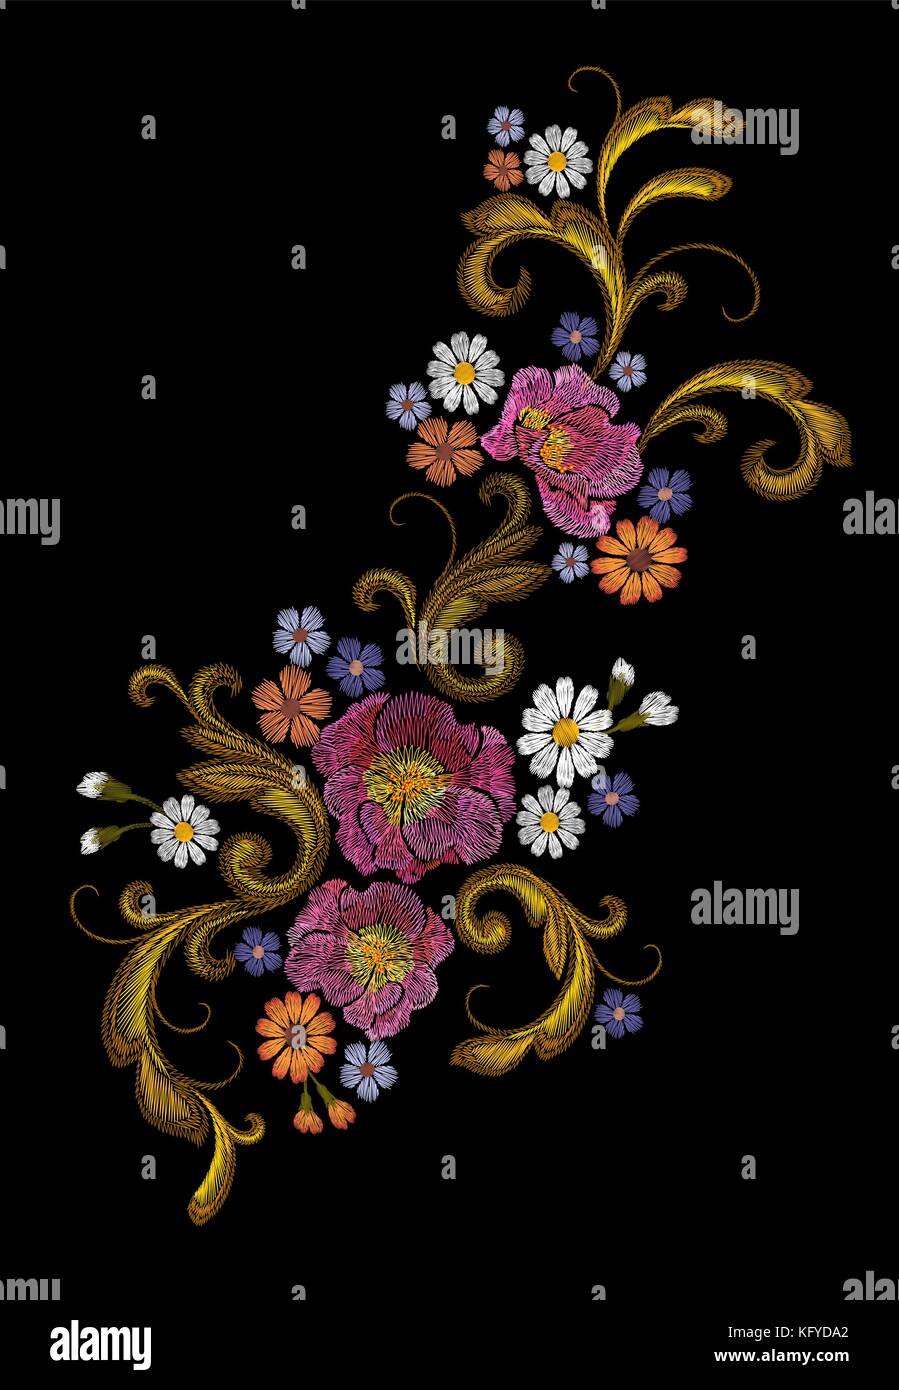 Realistic vector embroidery fashion patch. Flower rose daisy golden leaves vintage victorian design. Stitch texture floral arrangement clothes decoration illustration Stock Vector